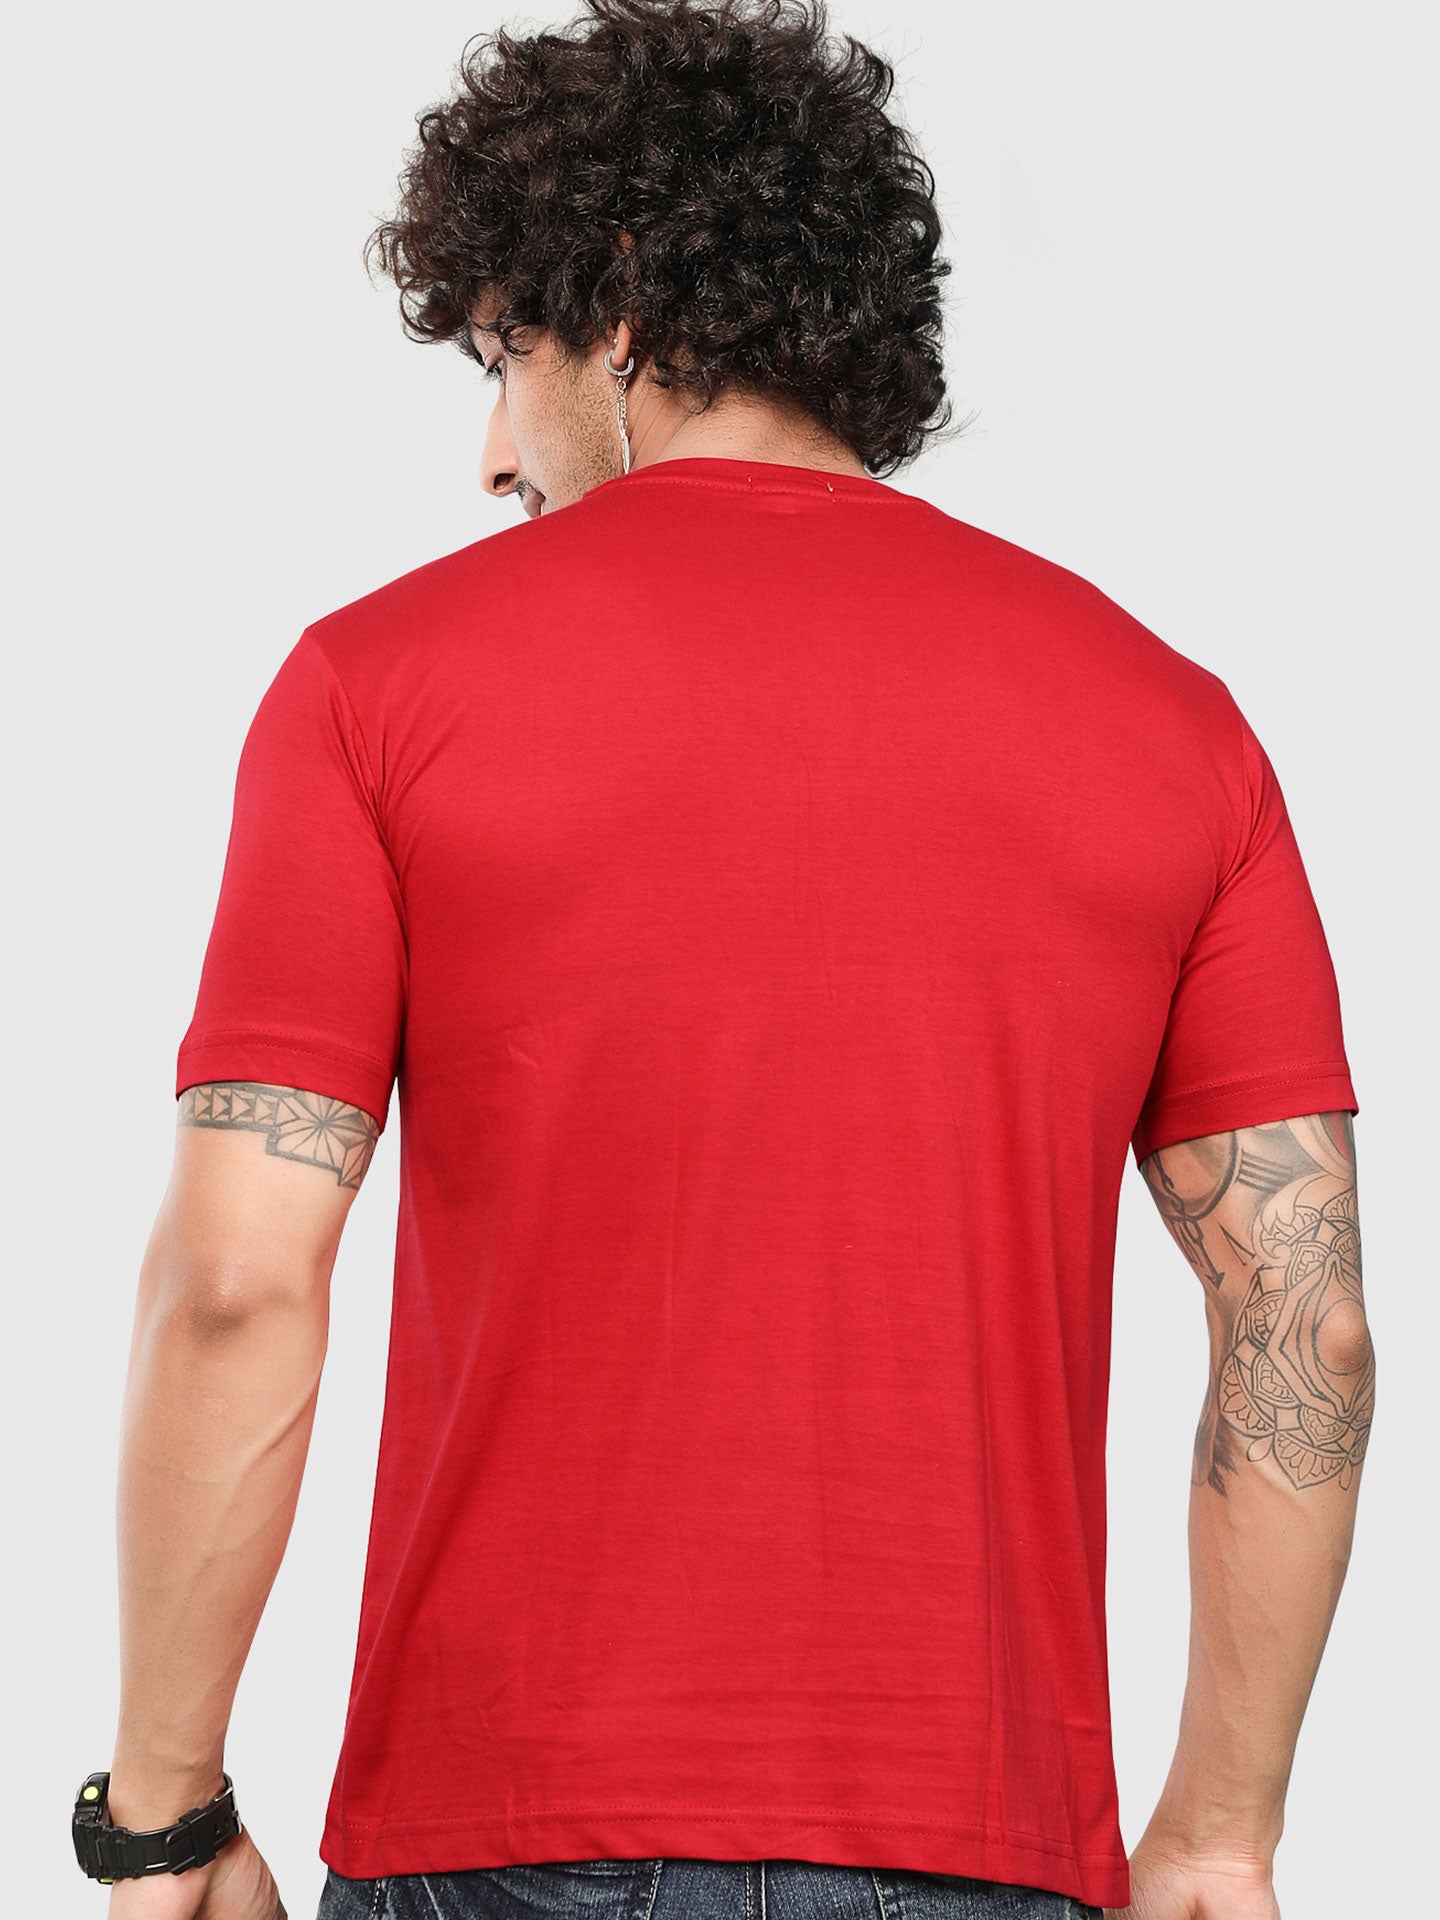 Men's Red Skull Printed T-shirt